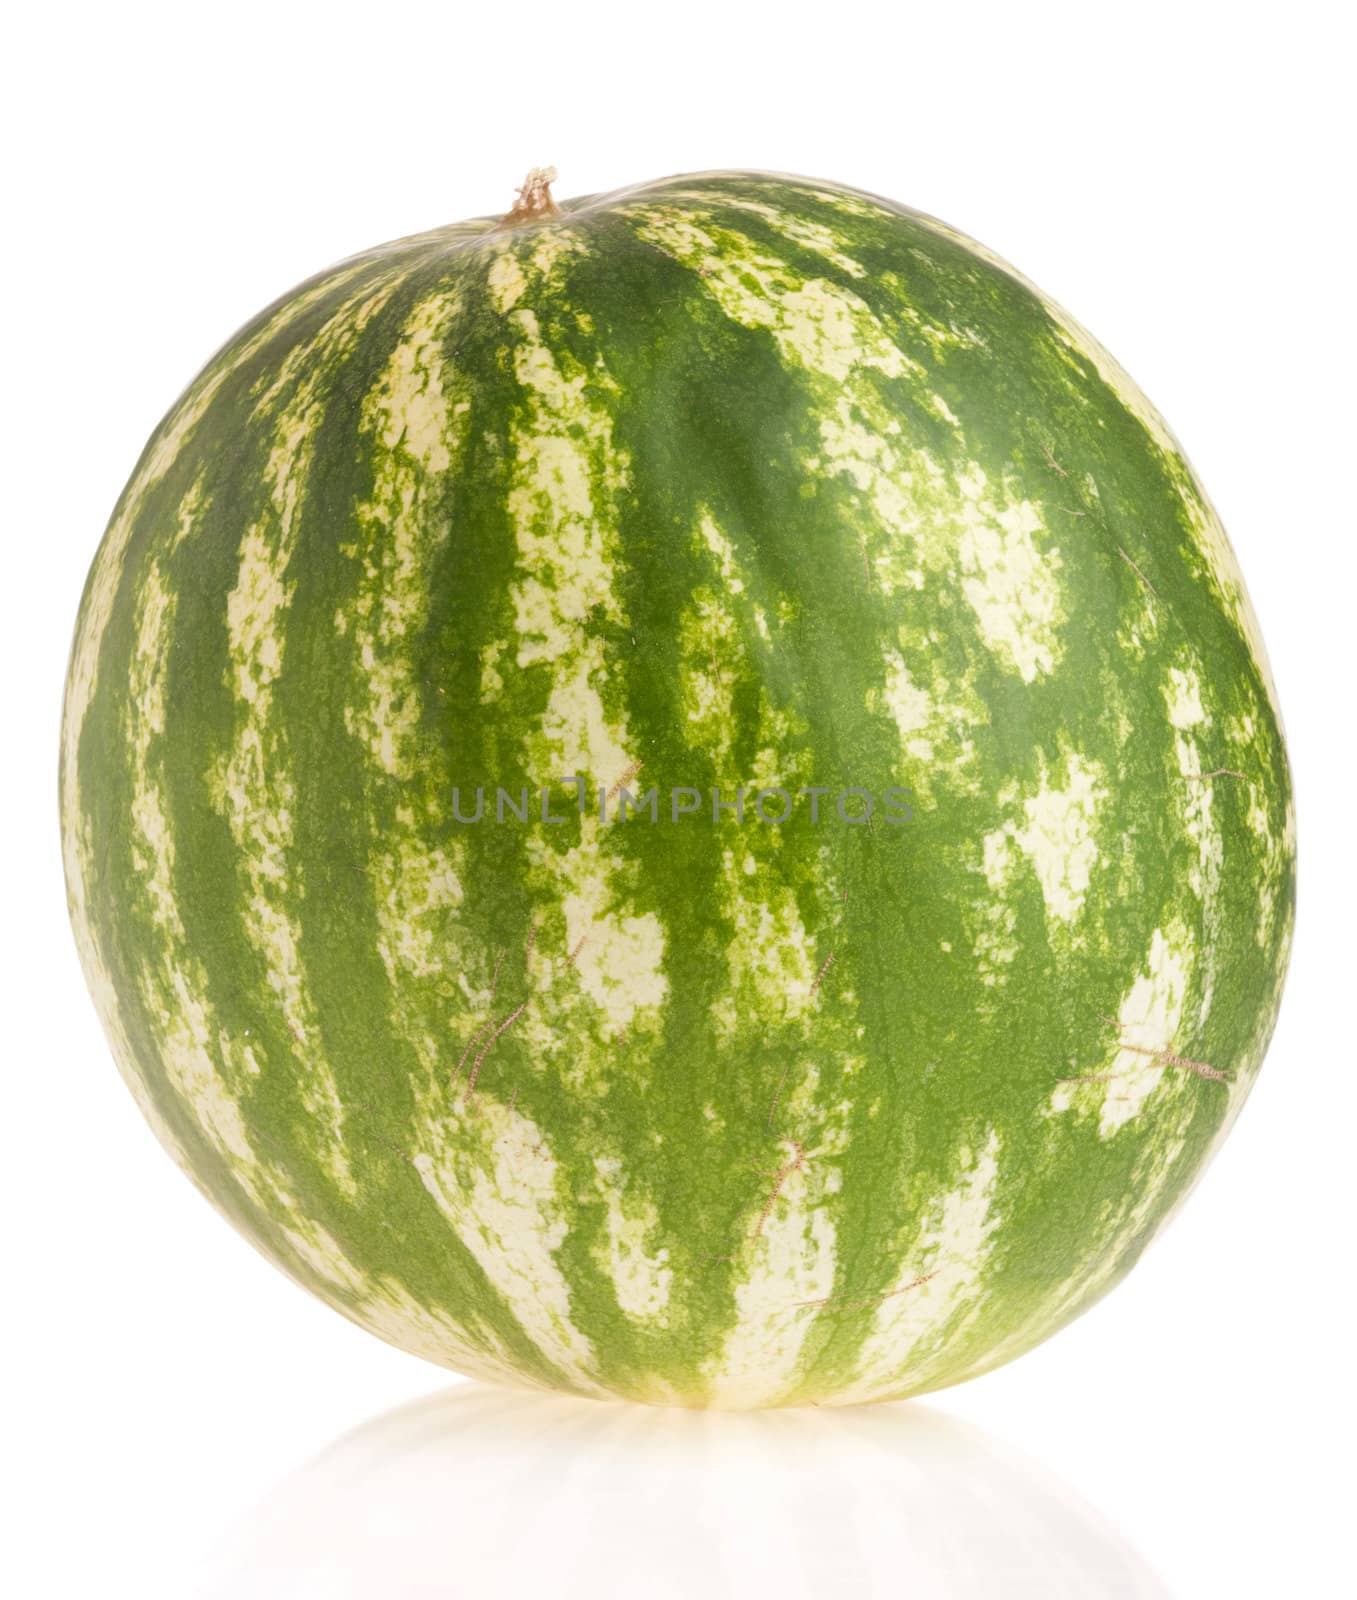 whole watermelon fruit (isolated on white background)